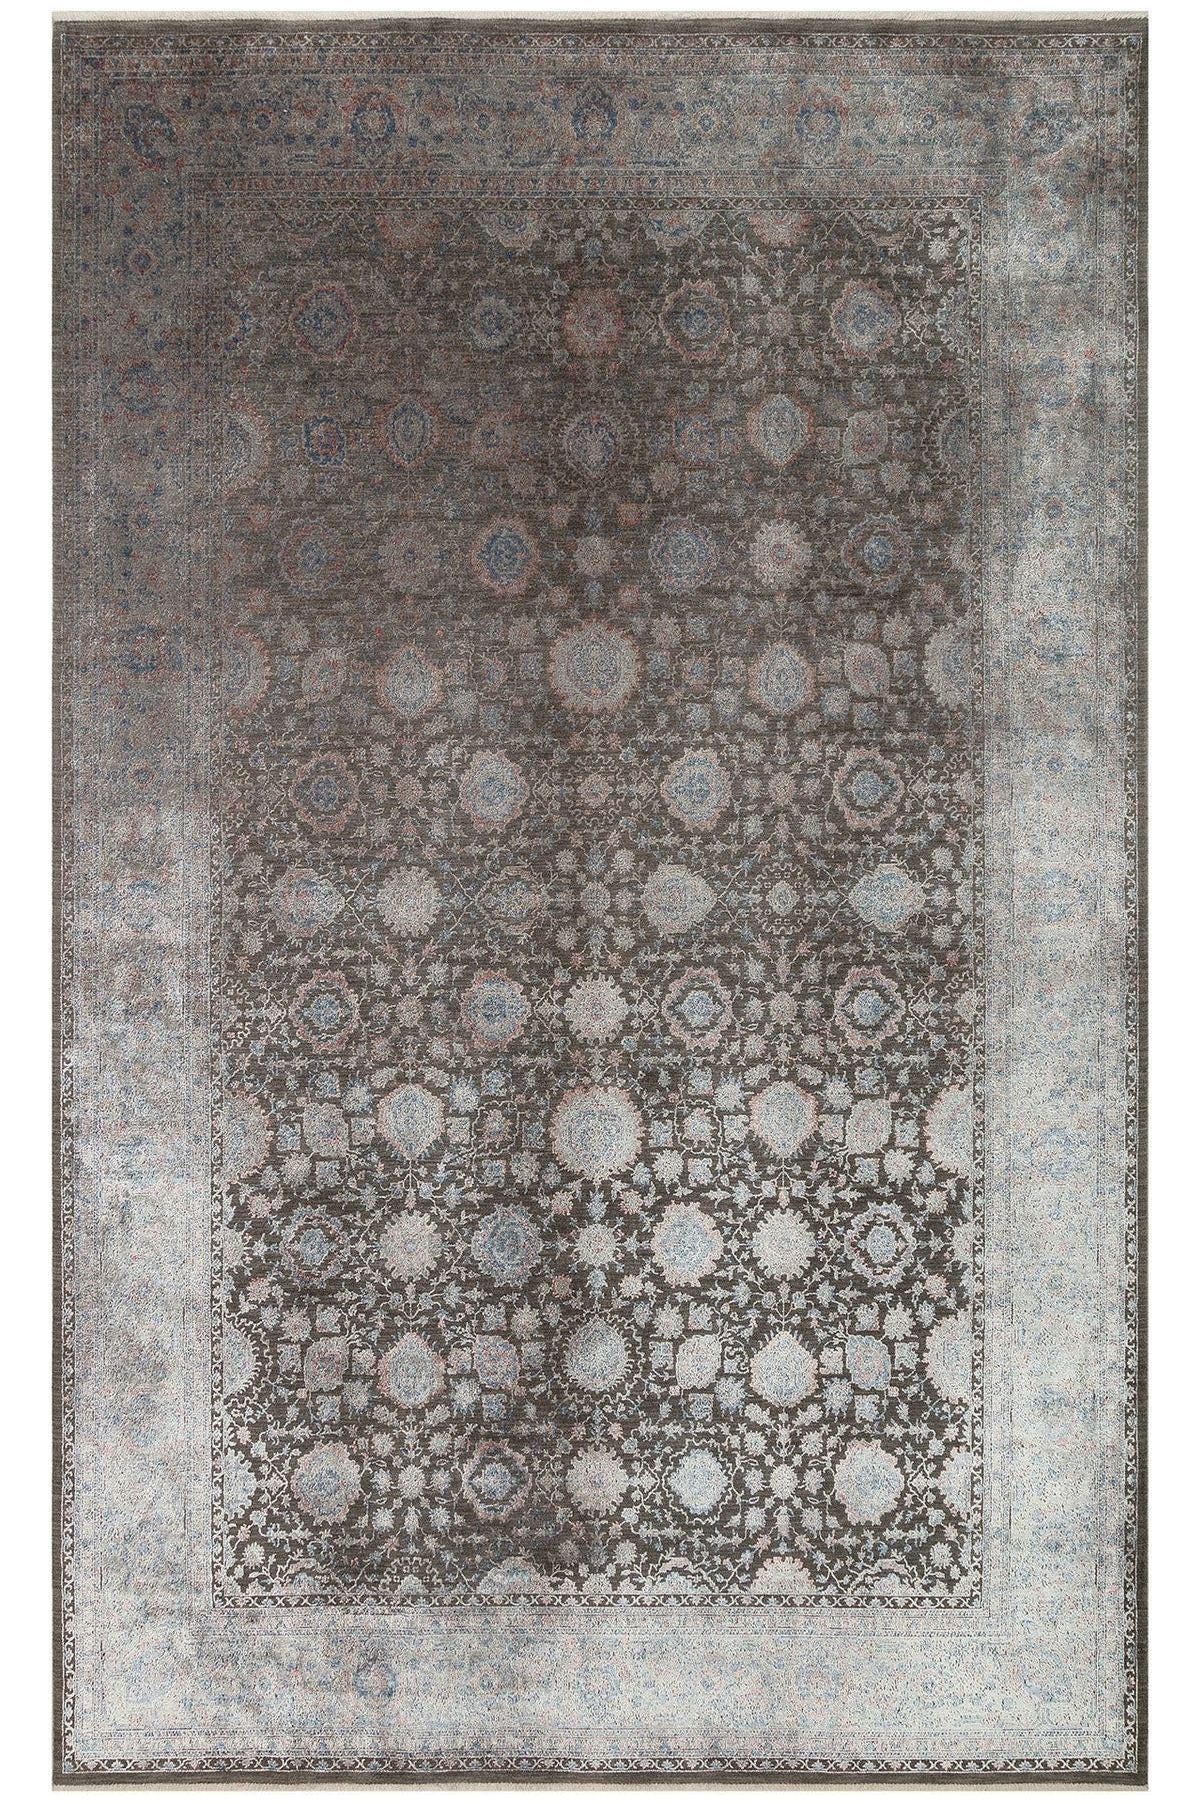 #Turkish_Carpets_Rugs# #Modern_Carpets# #Abrash_Carpets#Lhr 01 Marine